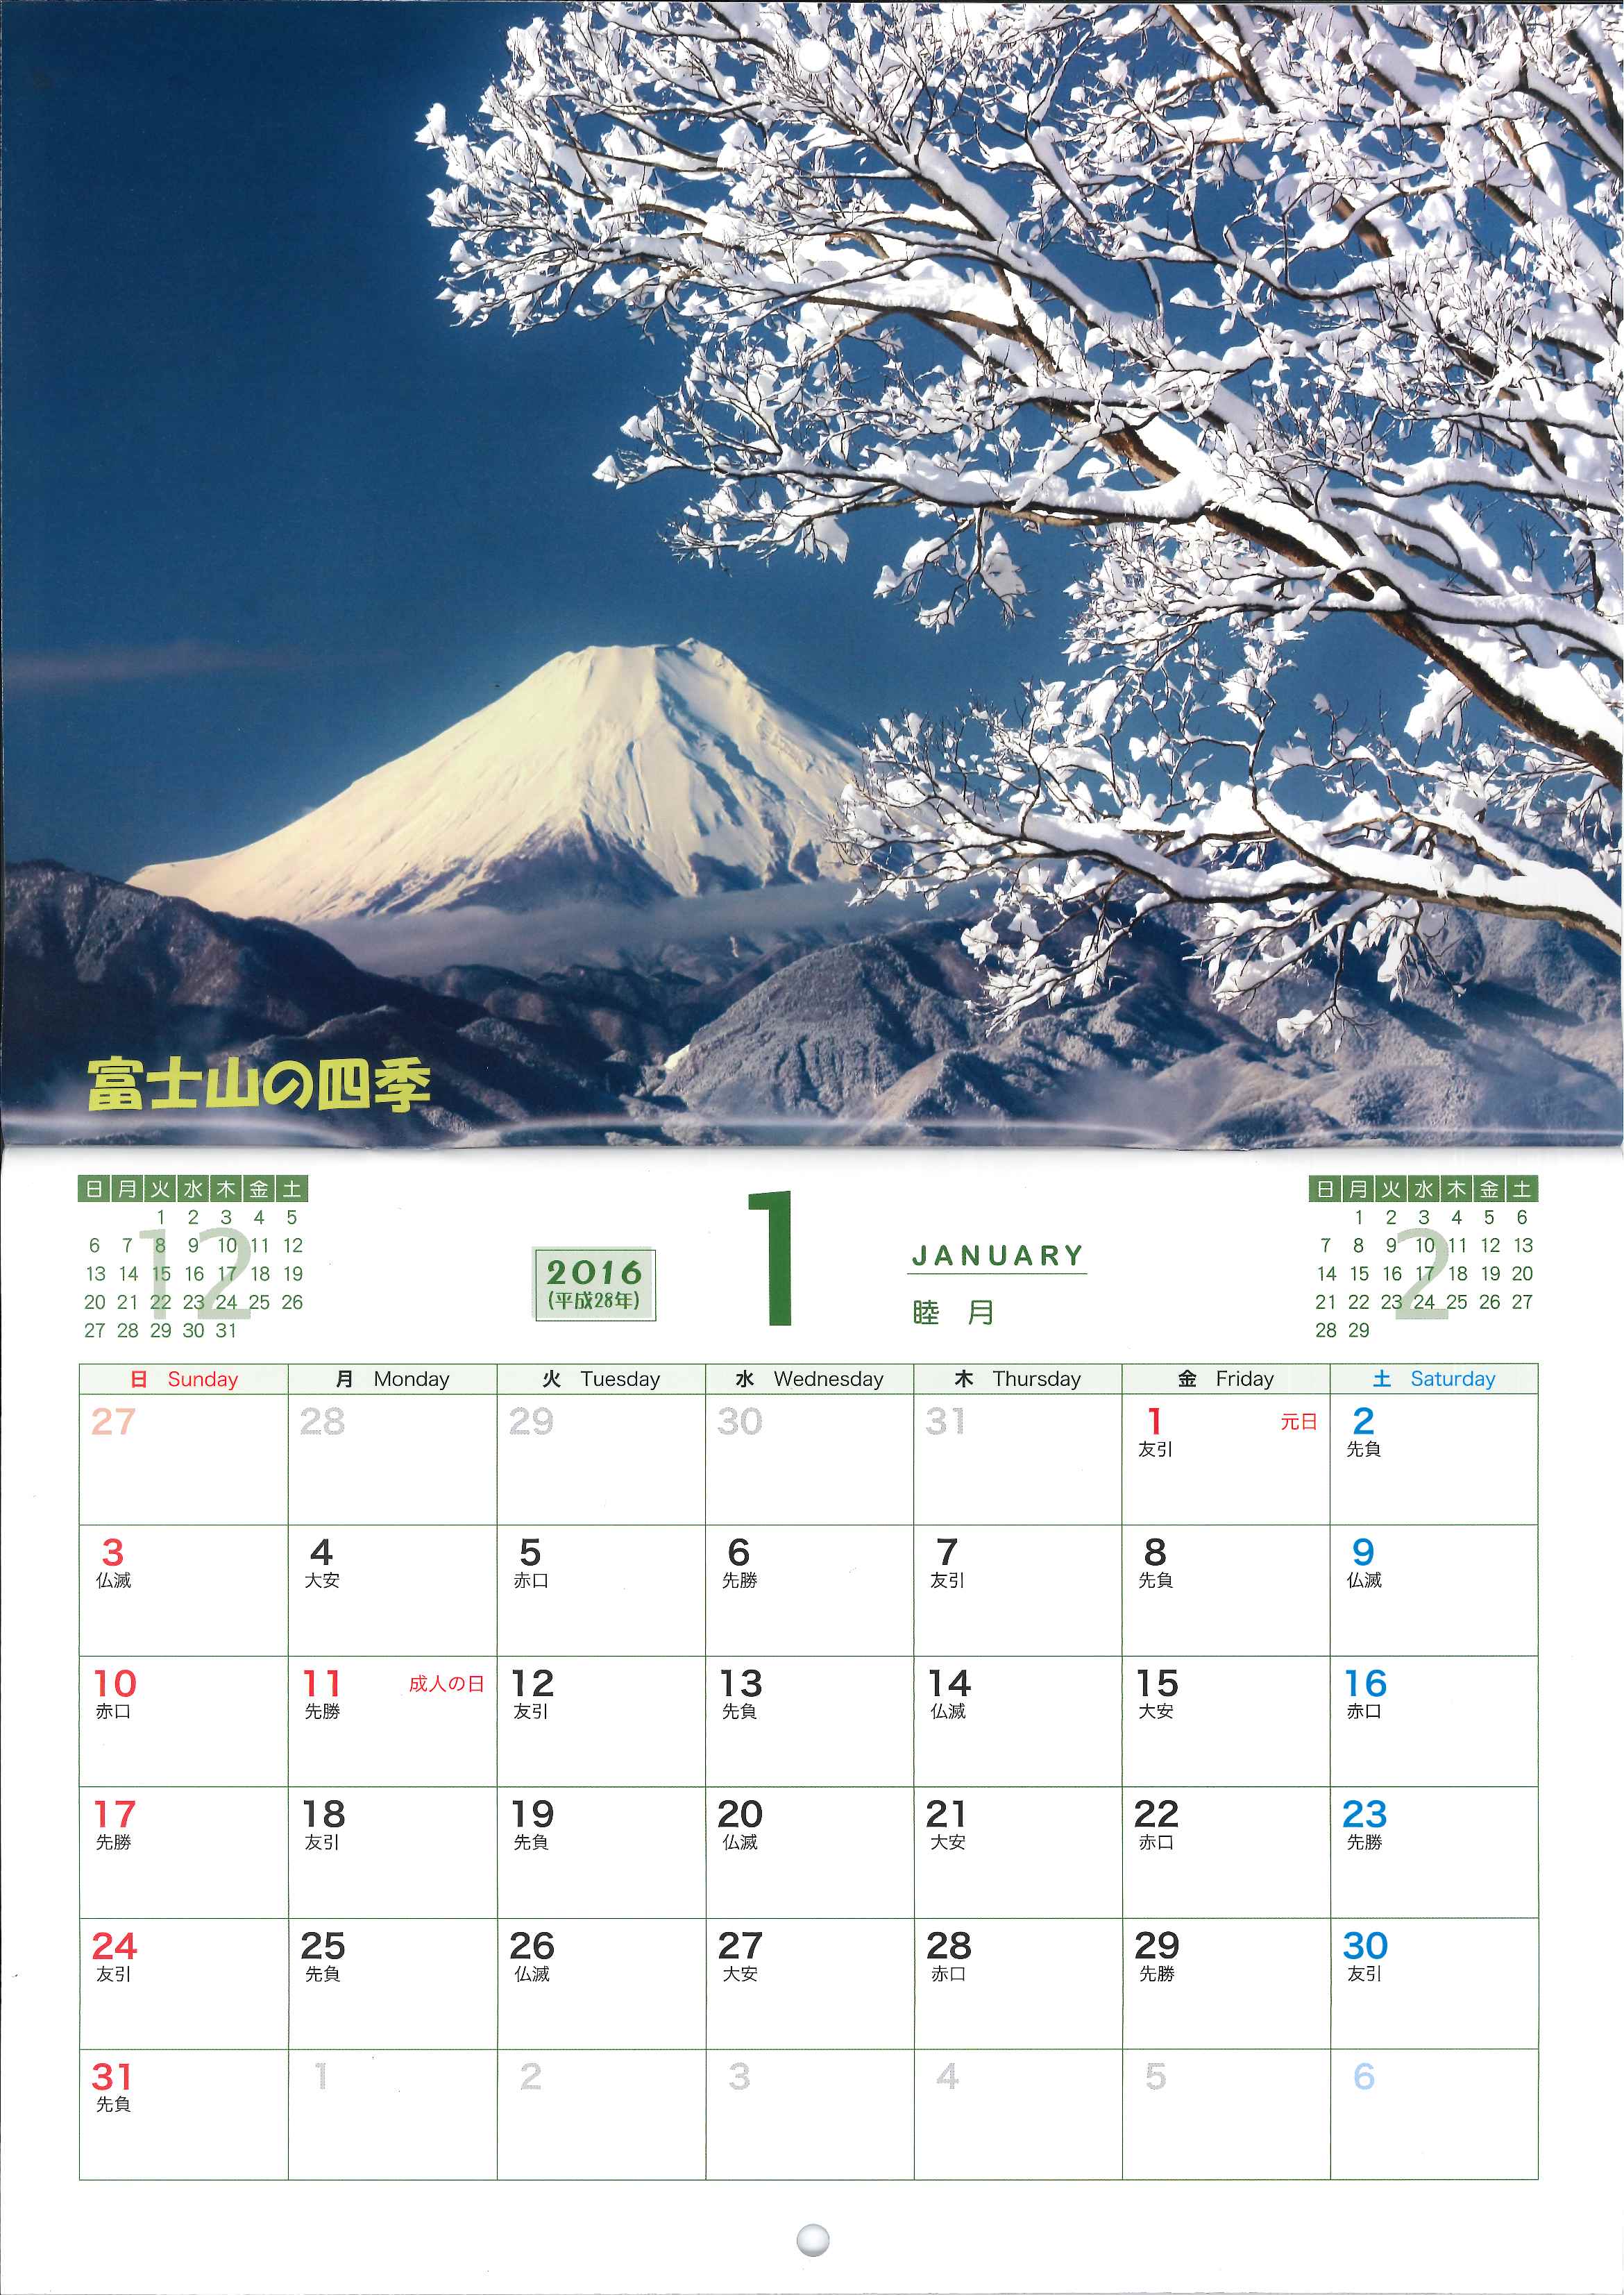 Calendar 2016　富士山の四季　高尾山や山中湖から